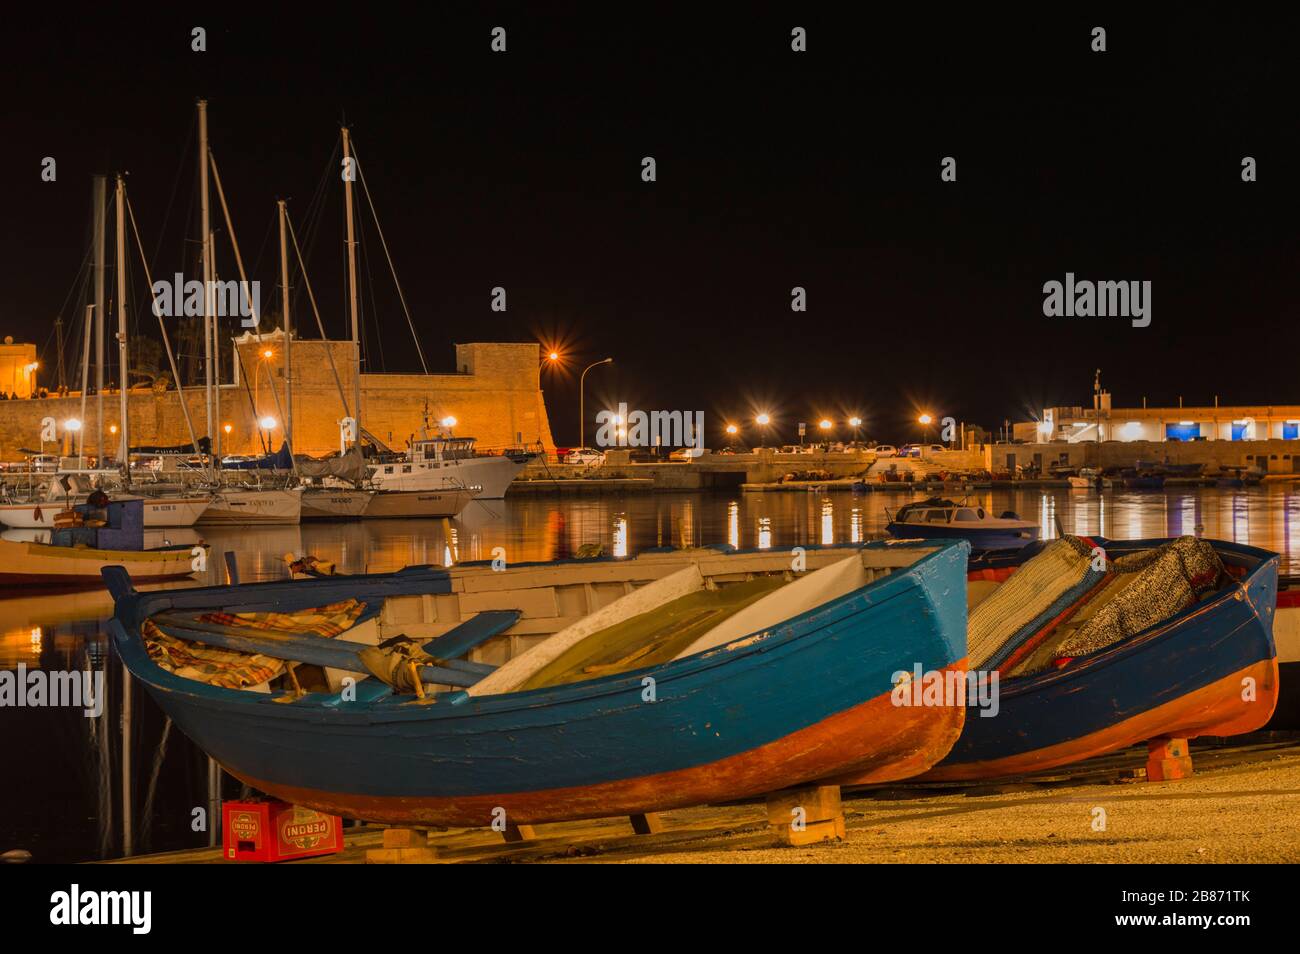 BARI, ITALY - FEBRUARY 16, 2020: rustic wooden boats and yachts in Bari fishing harbor at night Stock Photo